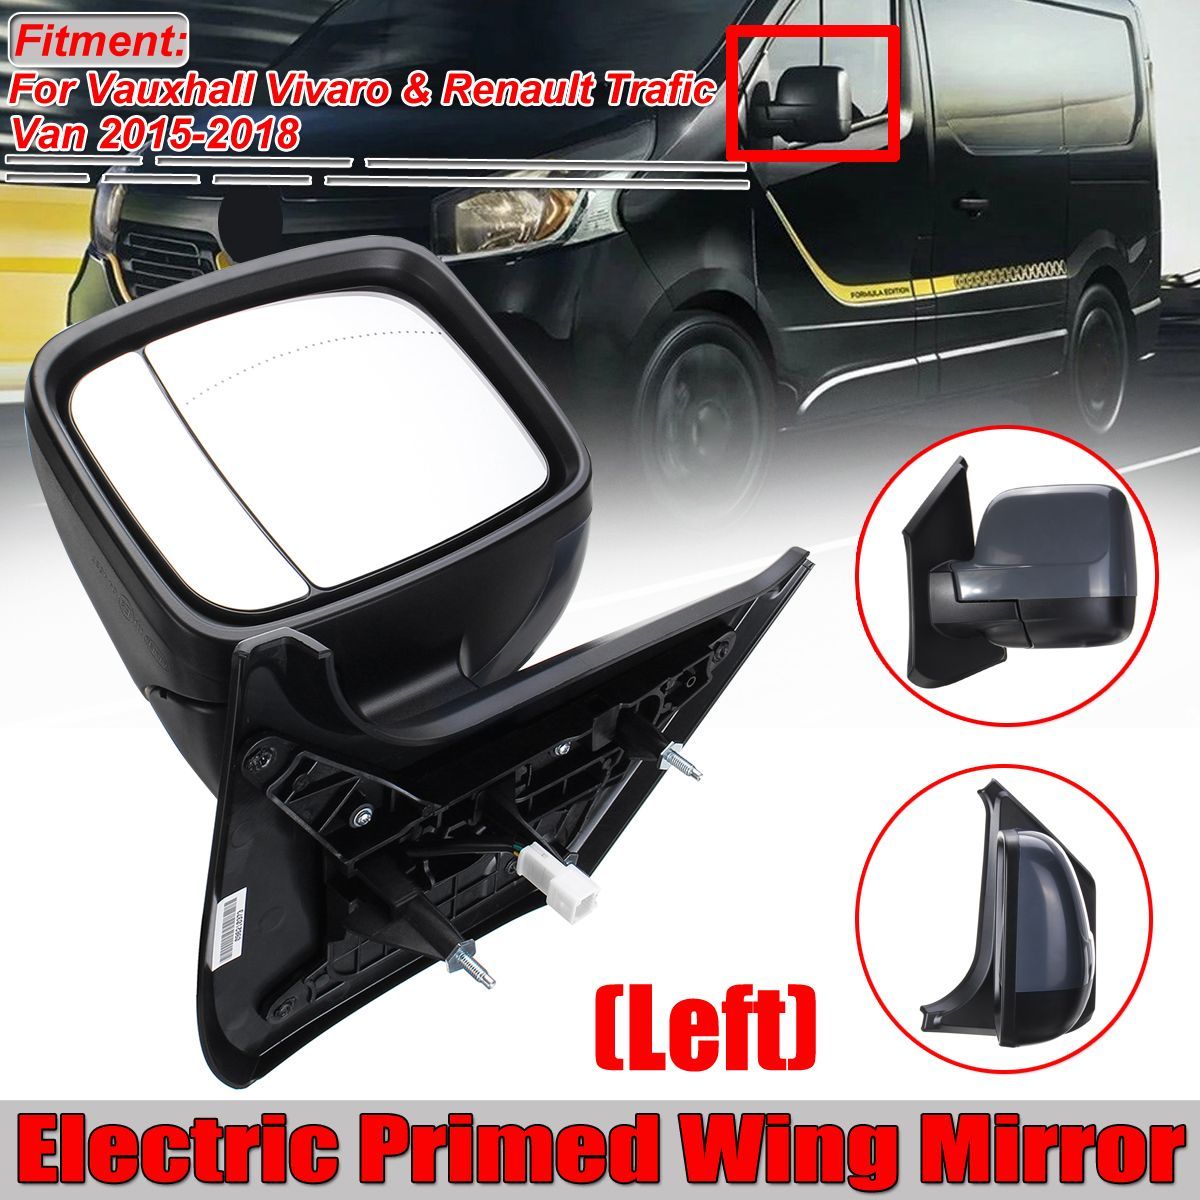 Car-Left-Electric-Primed-Wing-Mirror-For-Vauxhall-Vivaro-Renault-Trafic-Van-2015-2018-1535371